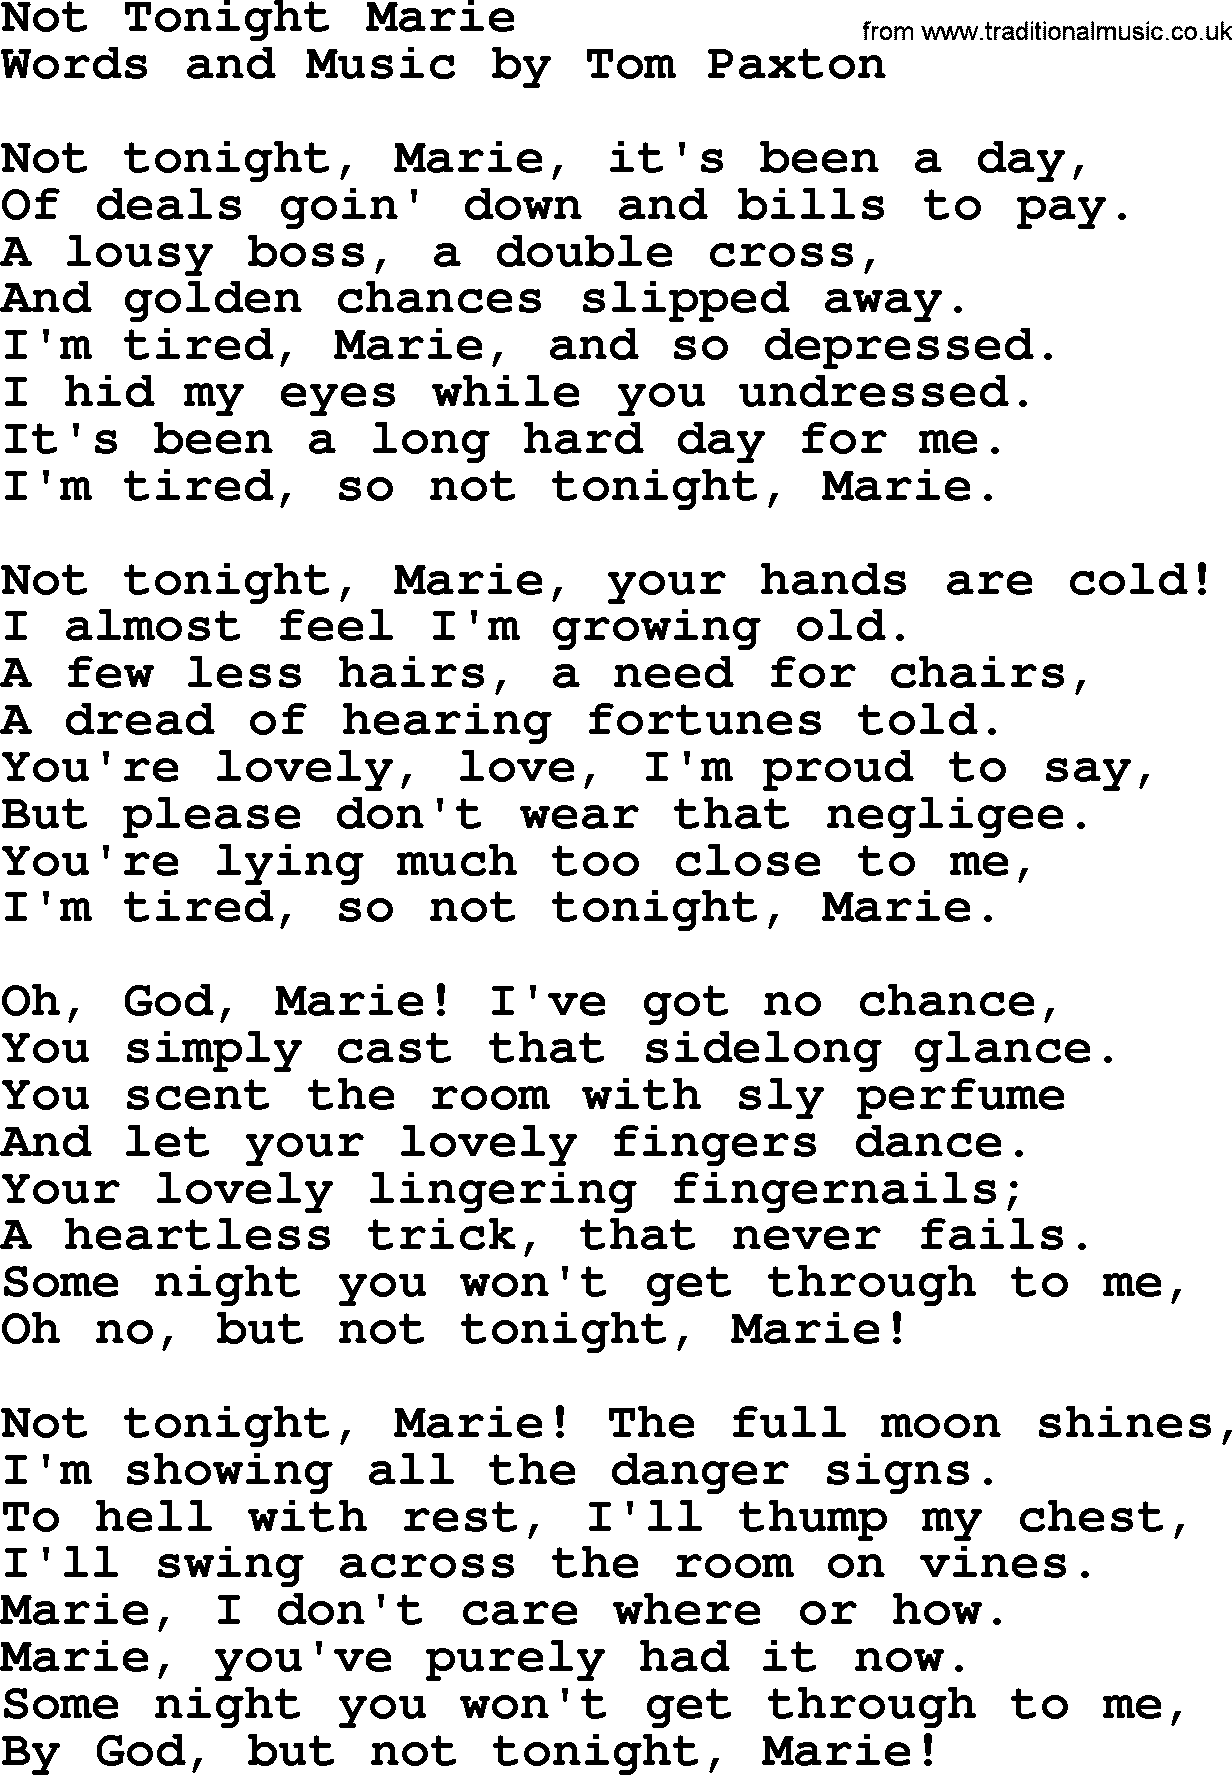 Tom Paxton song: Not Tonight Marie, lyrics